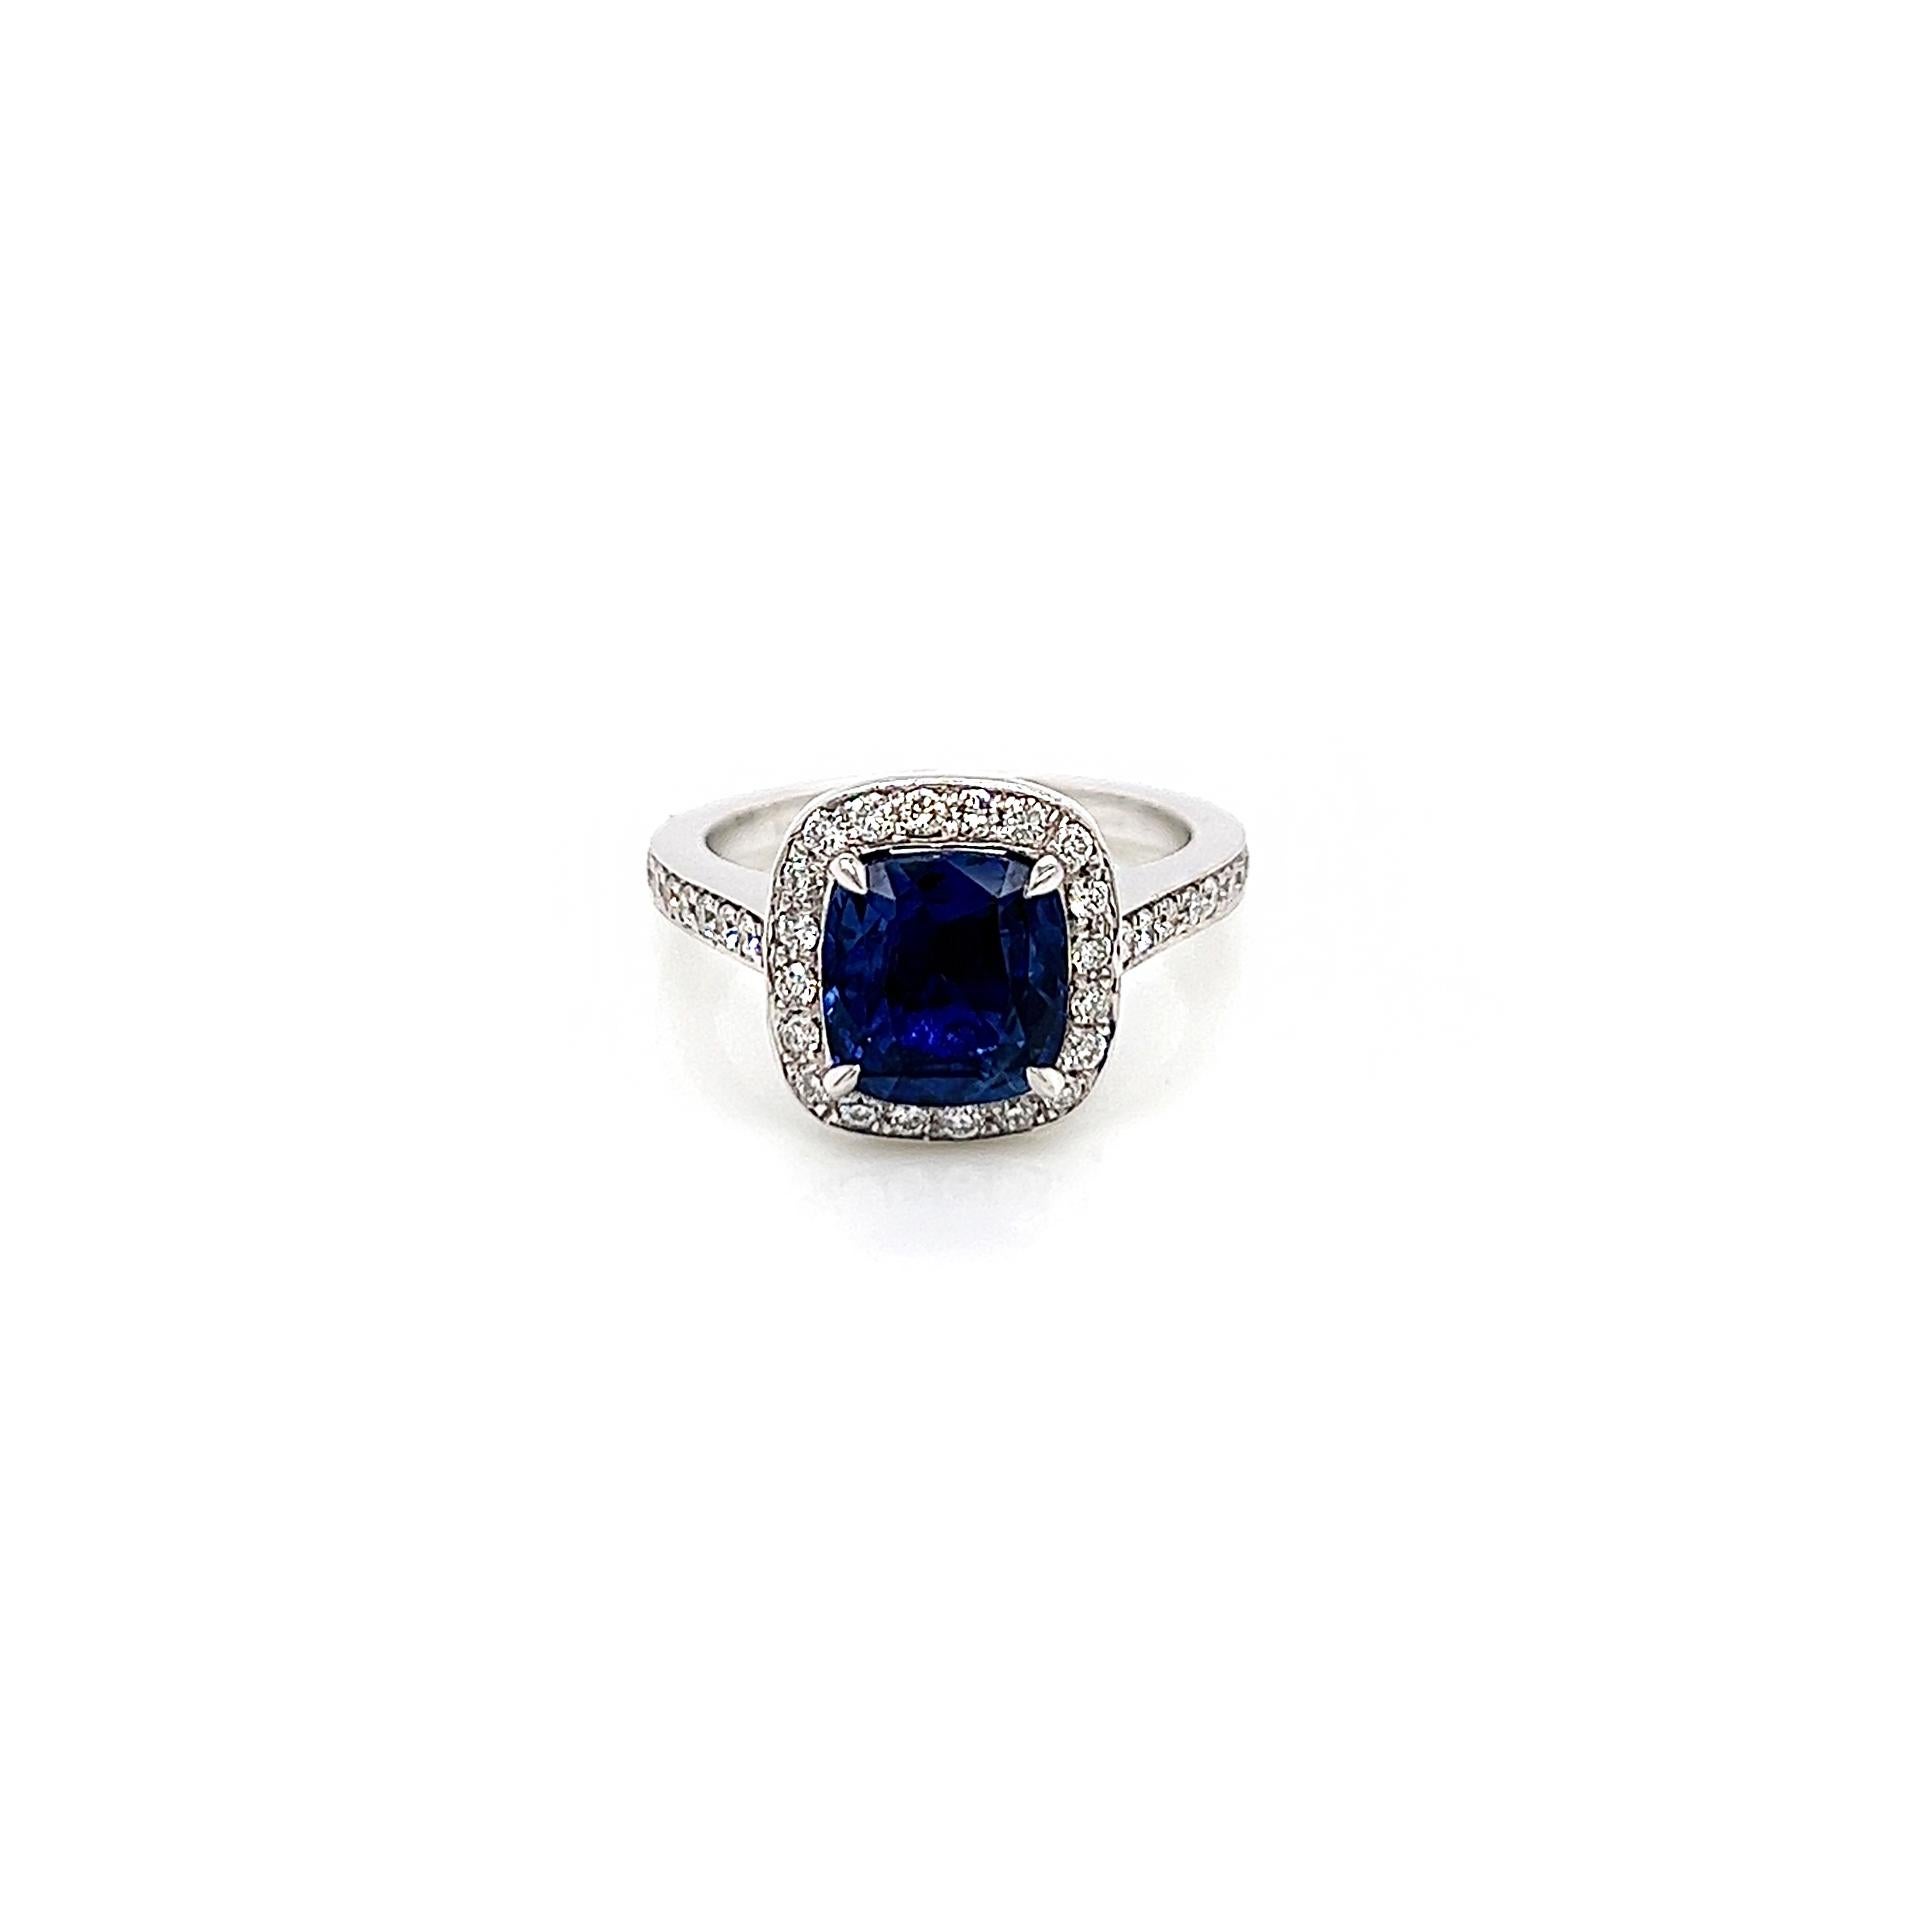 3.09 Total Carat No Heat  Sapphire and Diamond Halo Pave-Set Ladies Ring. GIA Certified.

-Metal Type: 18K White Gold
-2.42 Carat Cushion Cut Natural No Heat  Sapphire, GIA Certified 
-Sapphire Color: Blue 
-Sapphire Measurements: 7.52 x 7.17 x 4.47